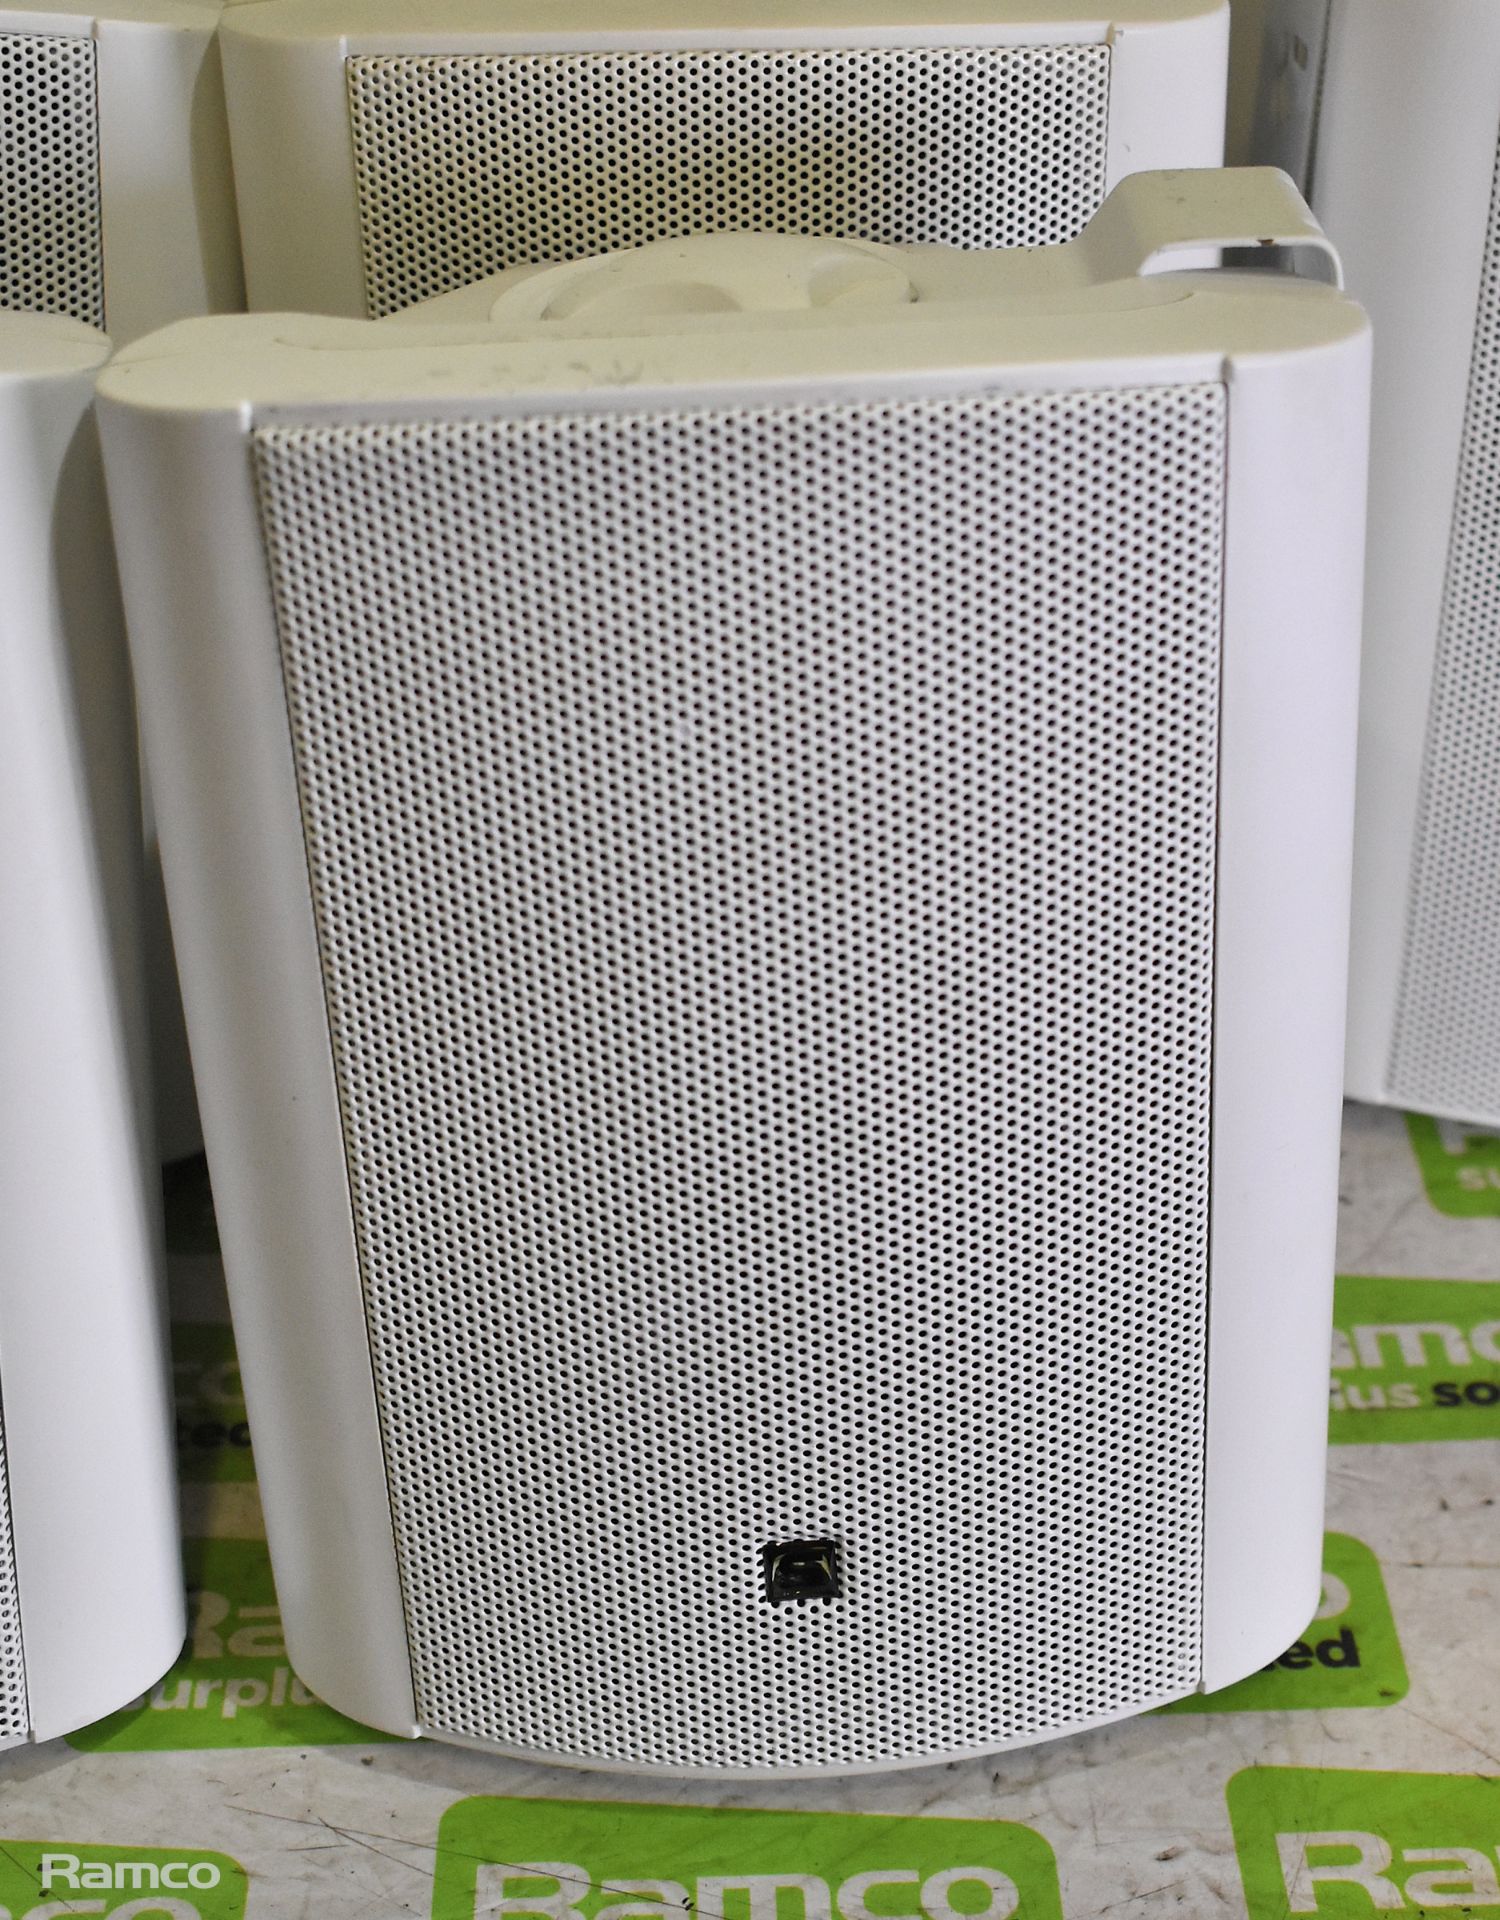 10x Sky wall mountable speakers with bracket - Image 4 of 6